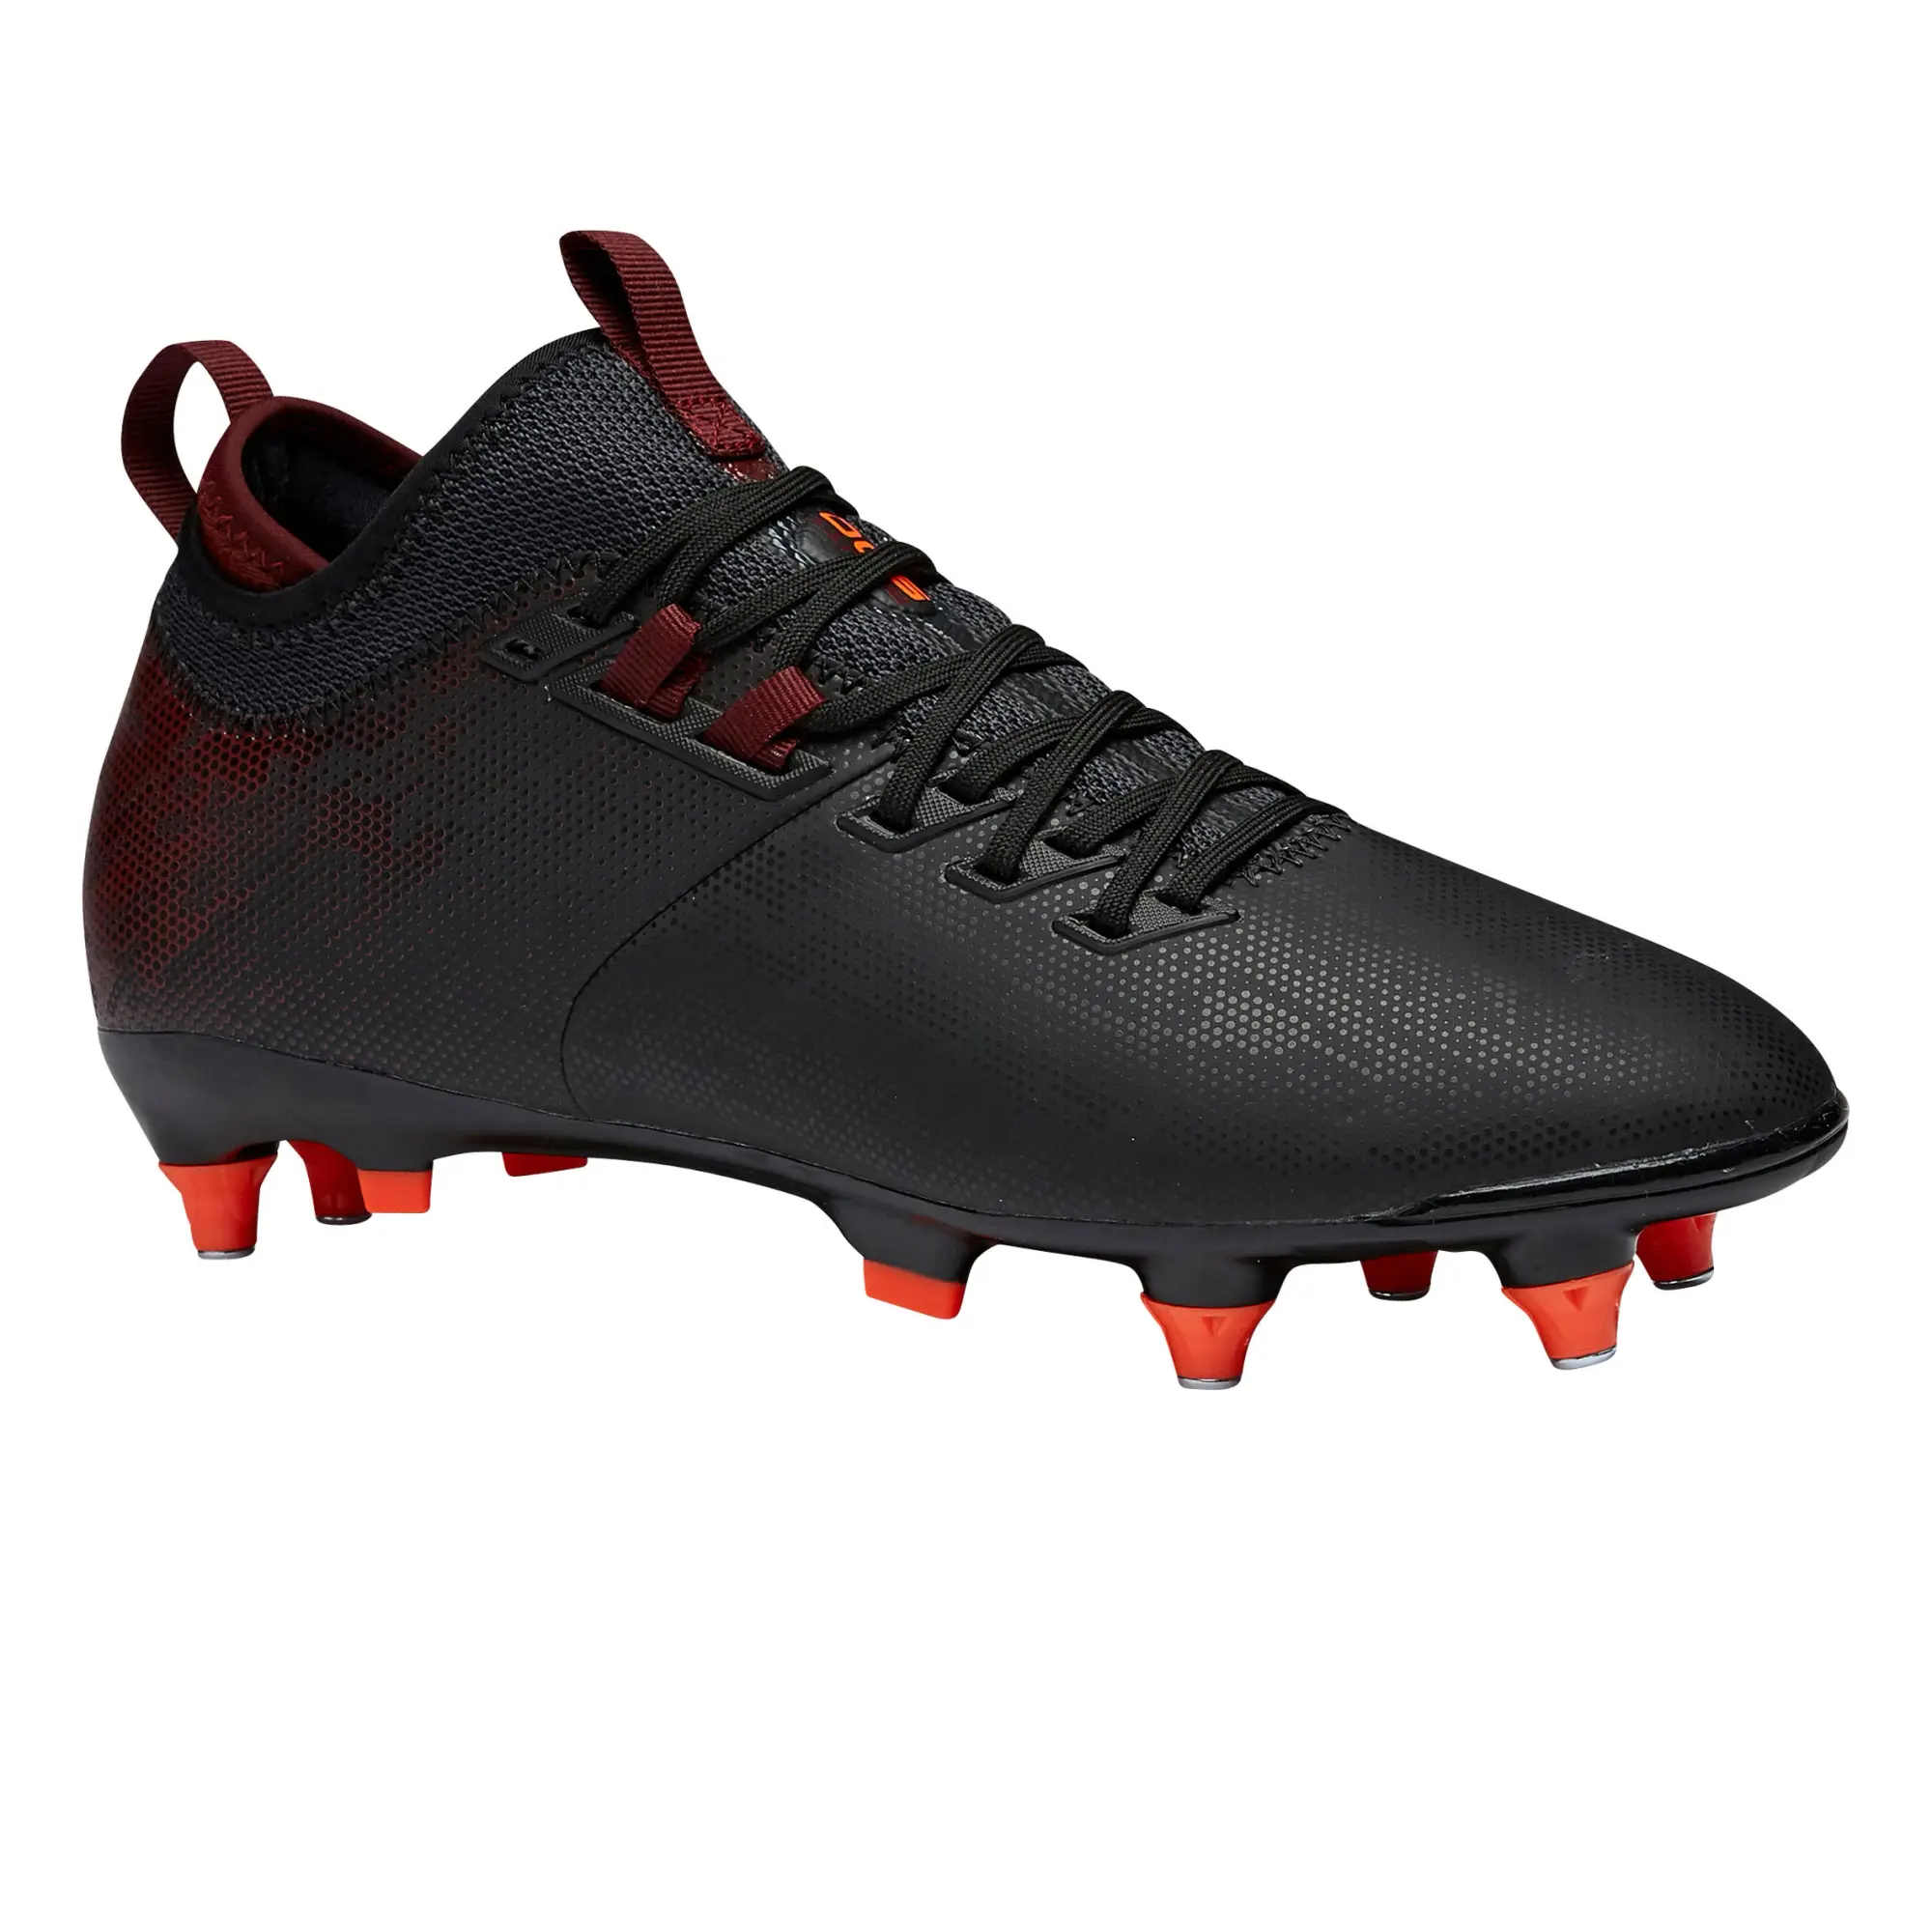 Kipsta Agility 900 Mid Sg Adult Soft Ground Football Boots - Black/burgundy